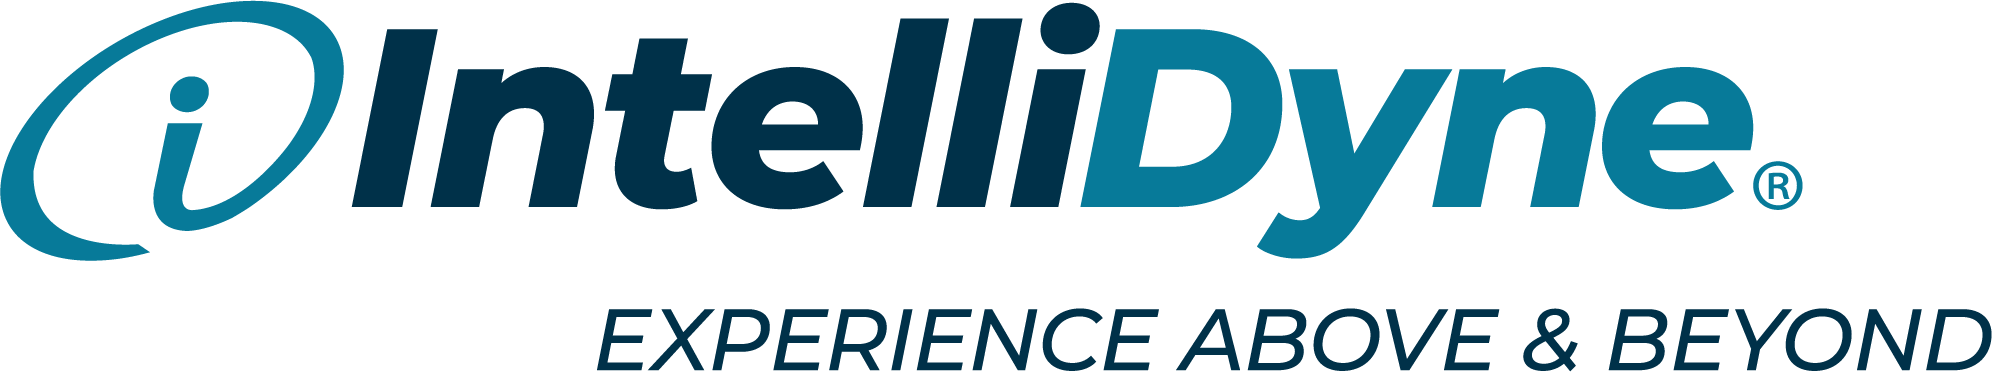 Intellidyne logo